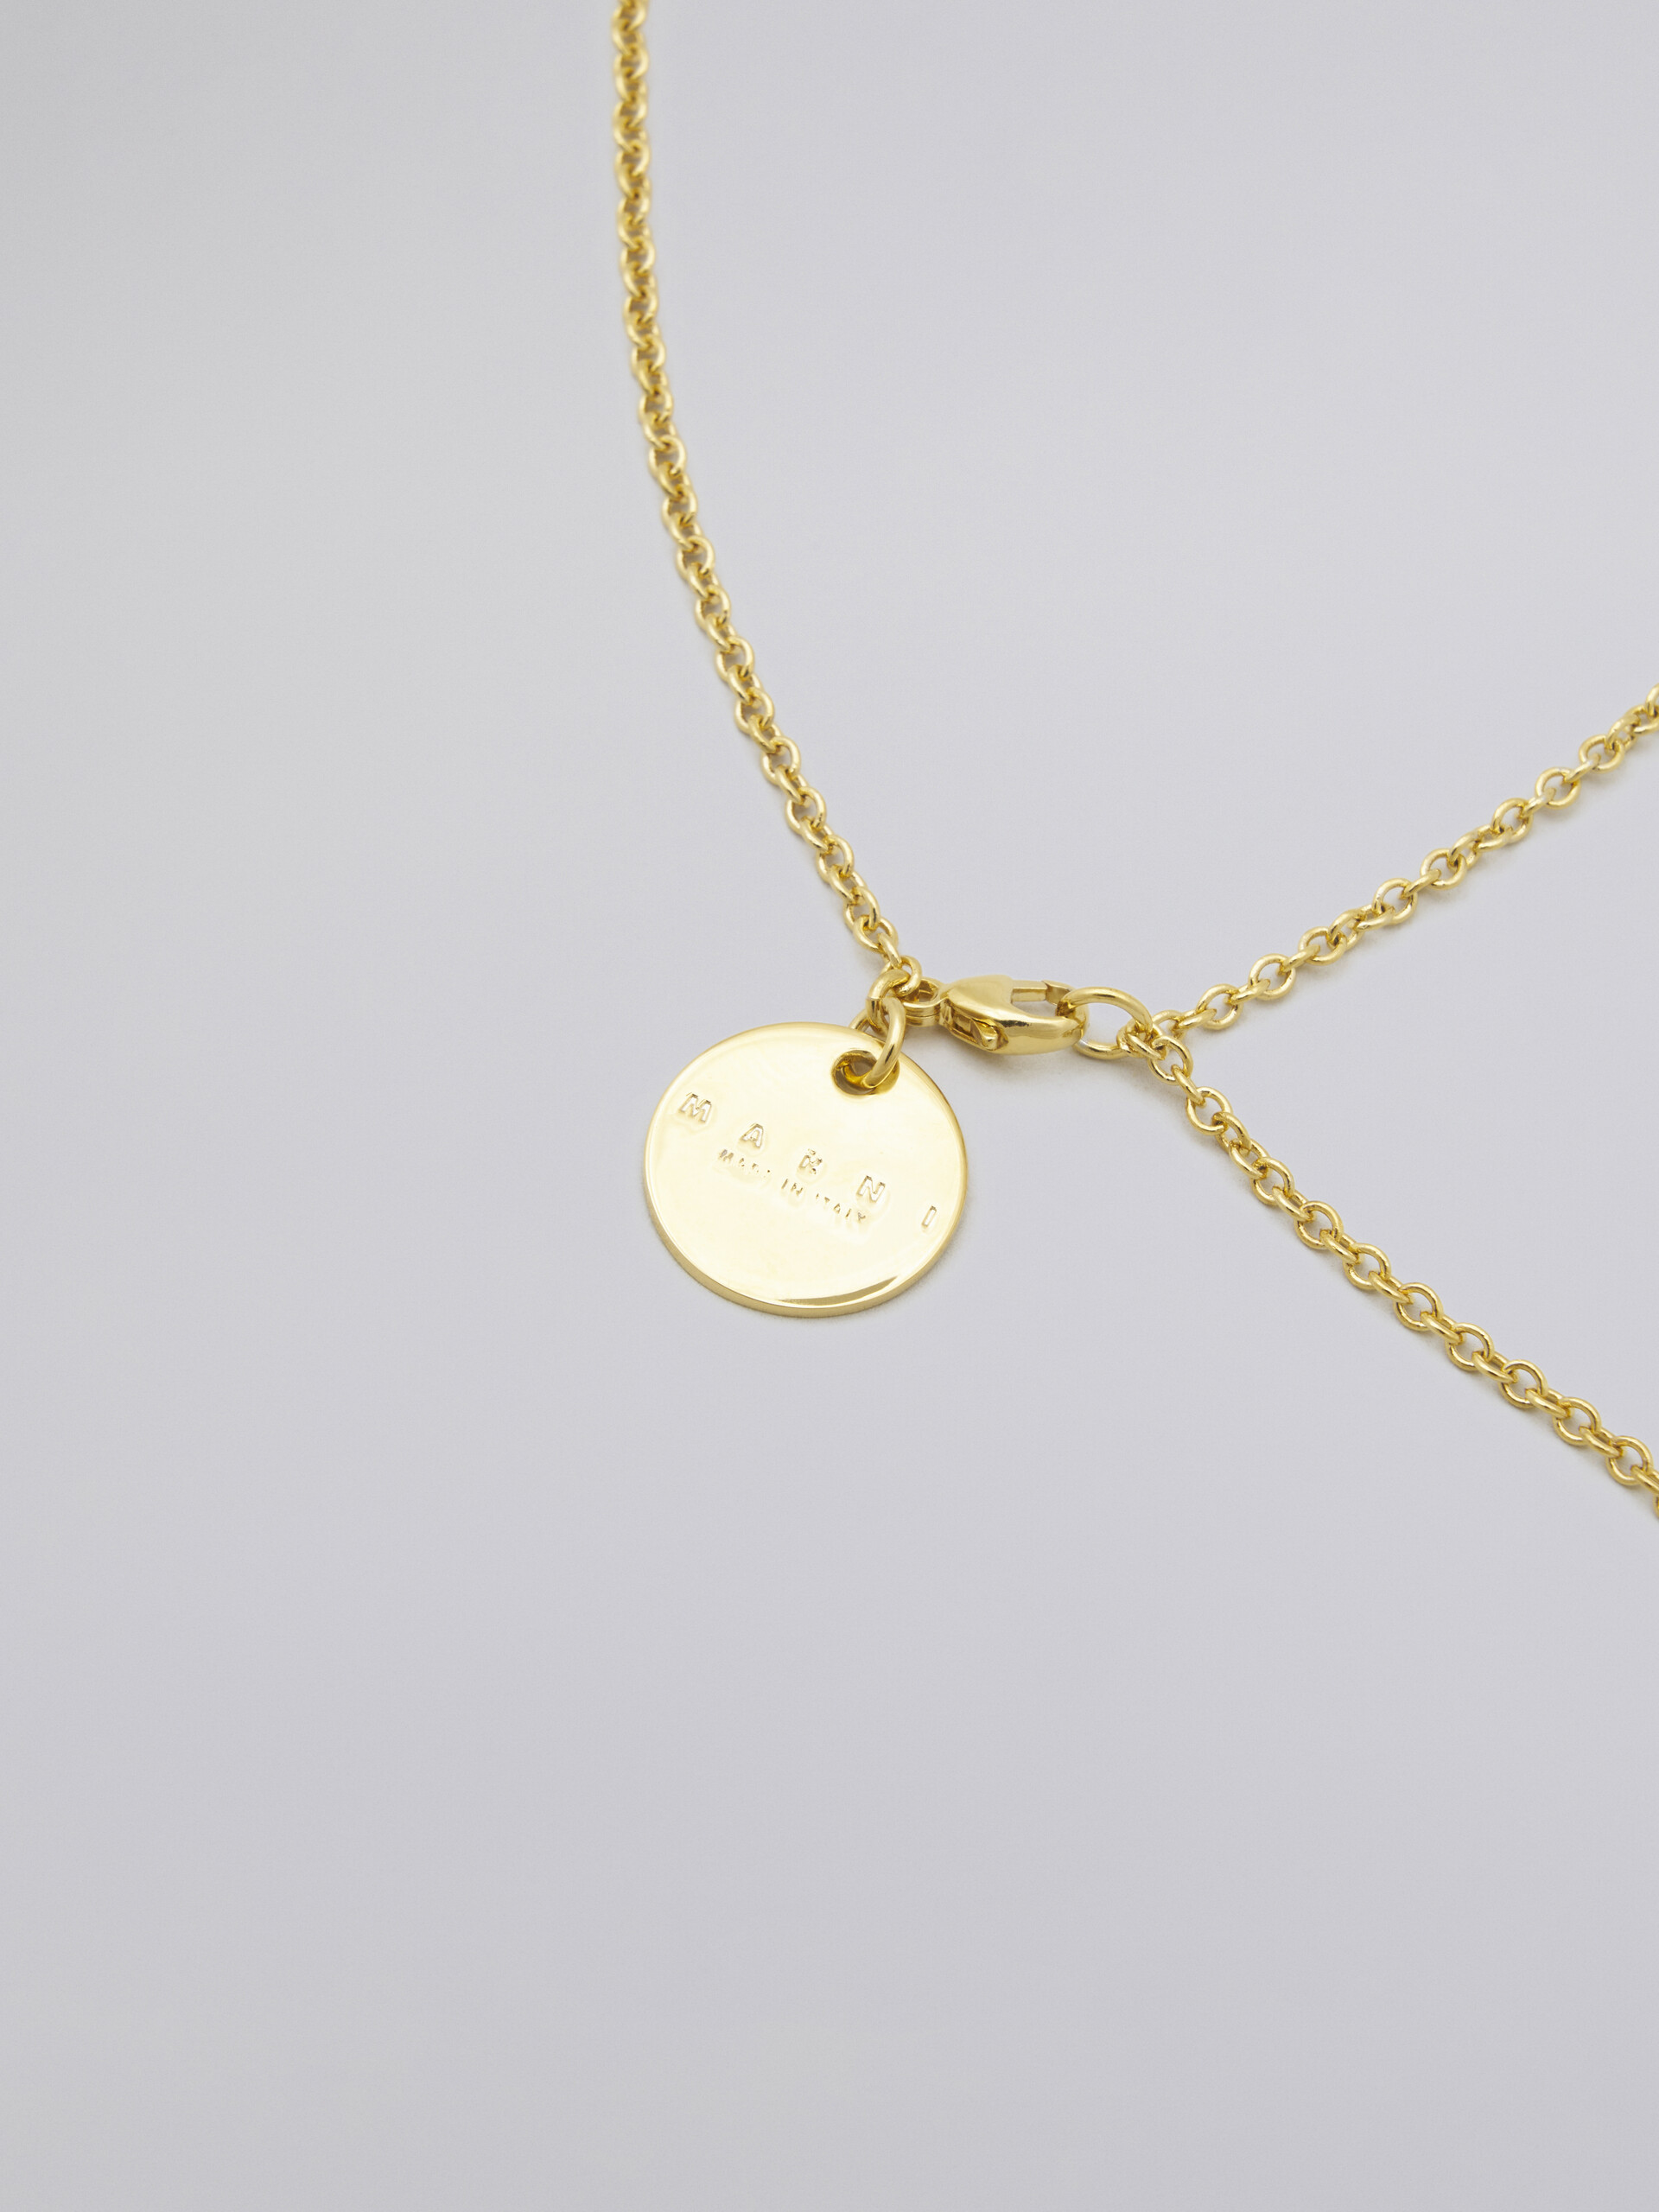 Goldfarbene TRAPEZE Metall-Halskette mit transparentem, emailliertem Anhänger - Halsketten - Image 3